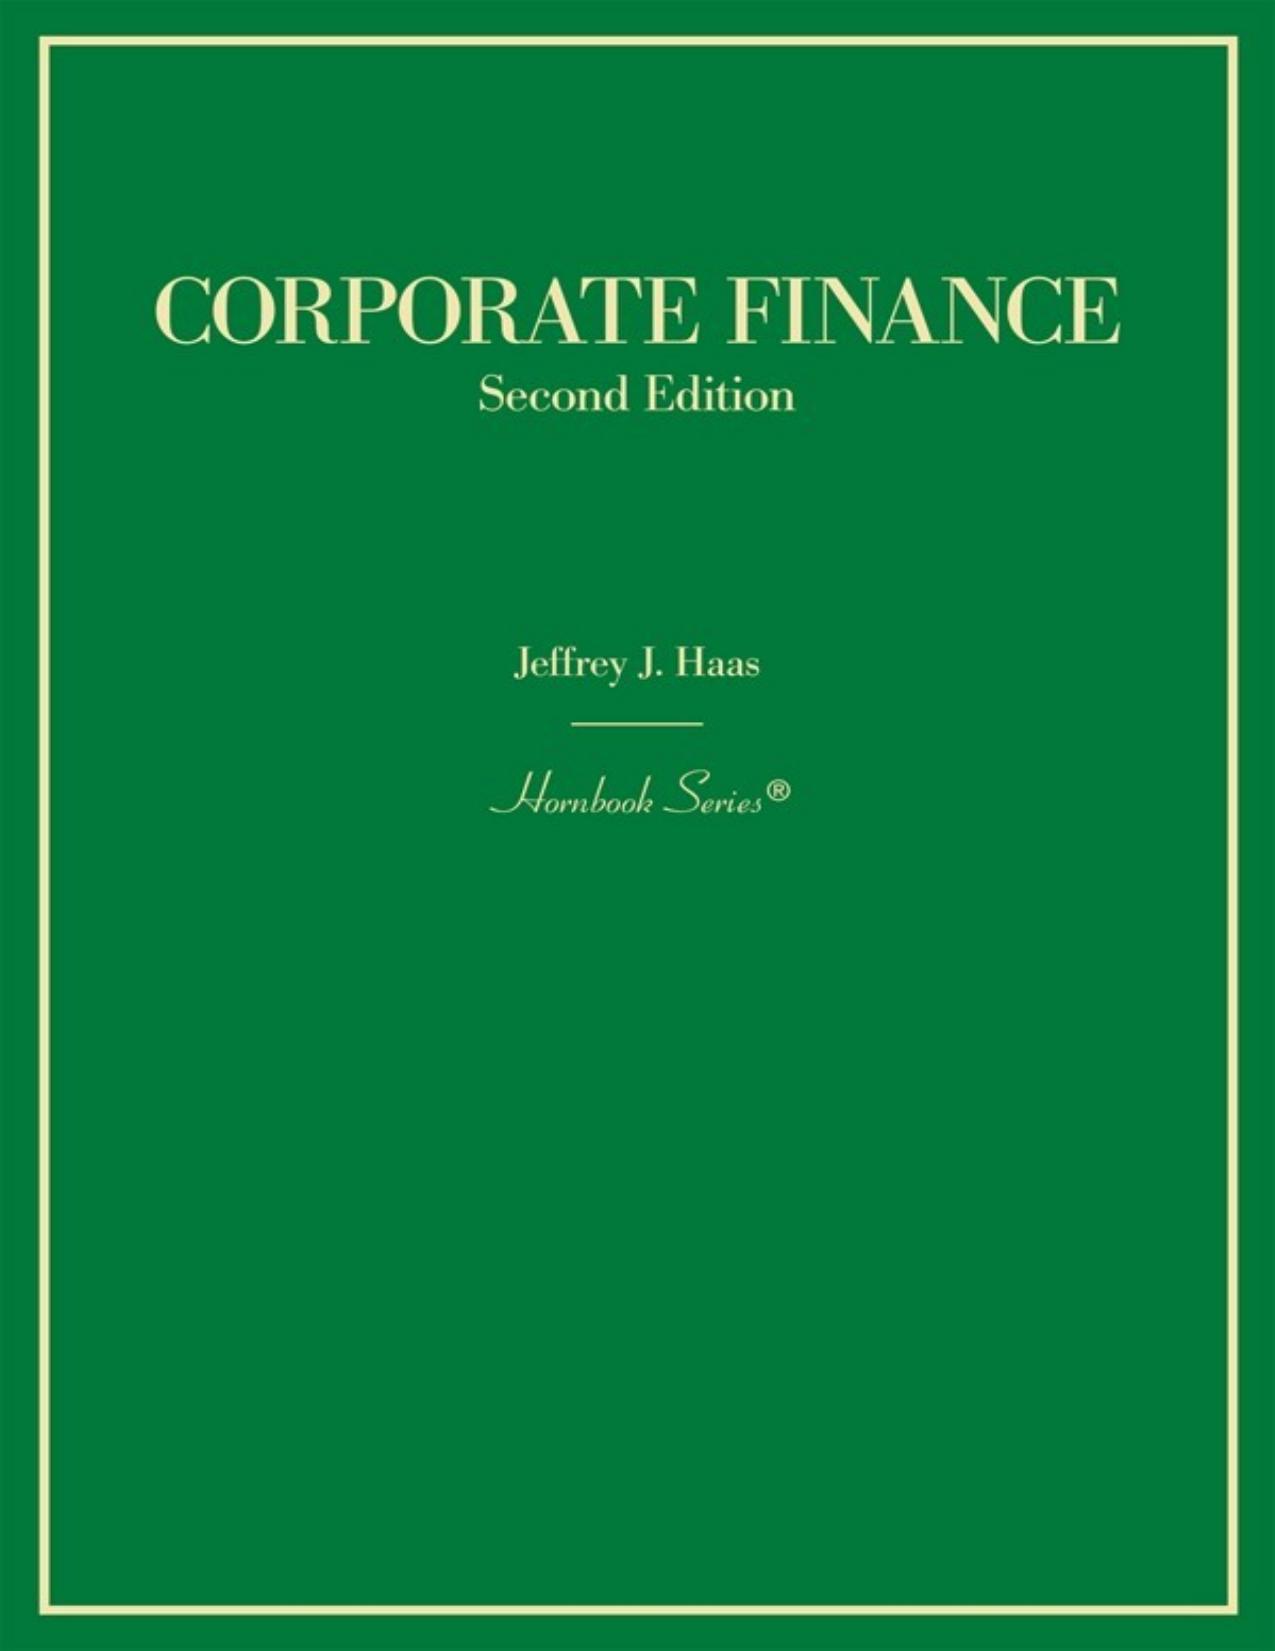 (eBook PDF)Corporate Finance (Hornbooks) 2nd Edition by Jeffrey J. Haas